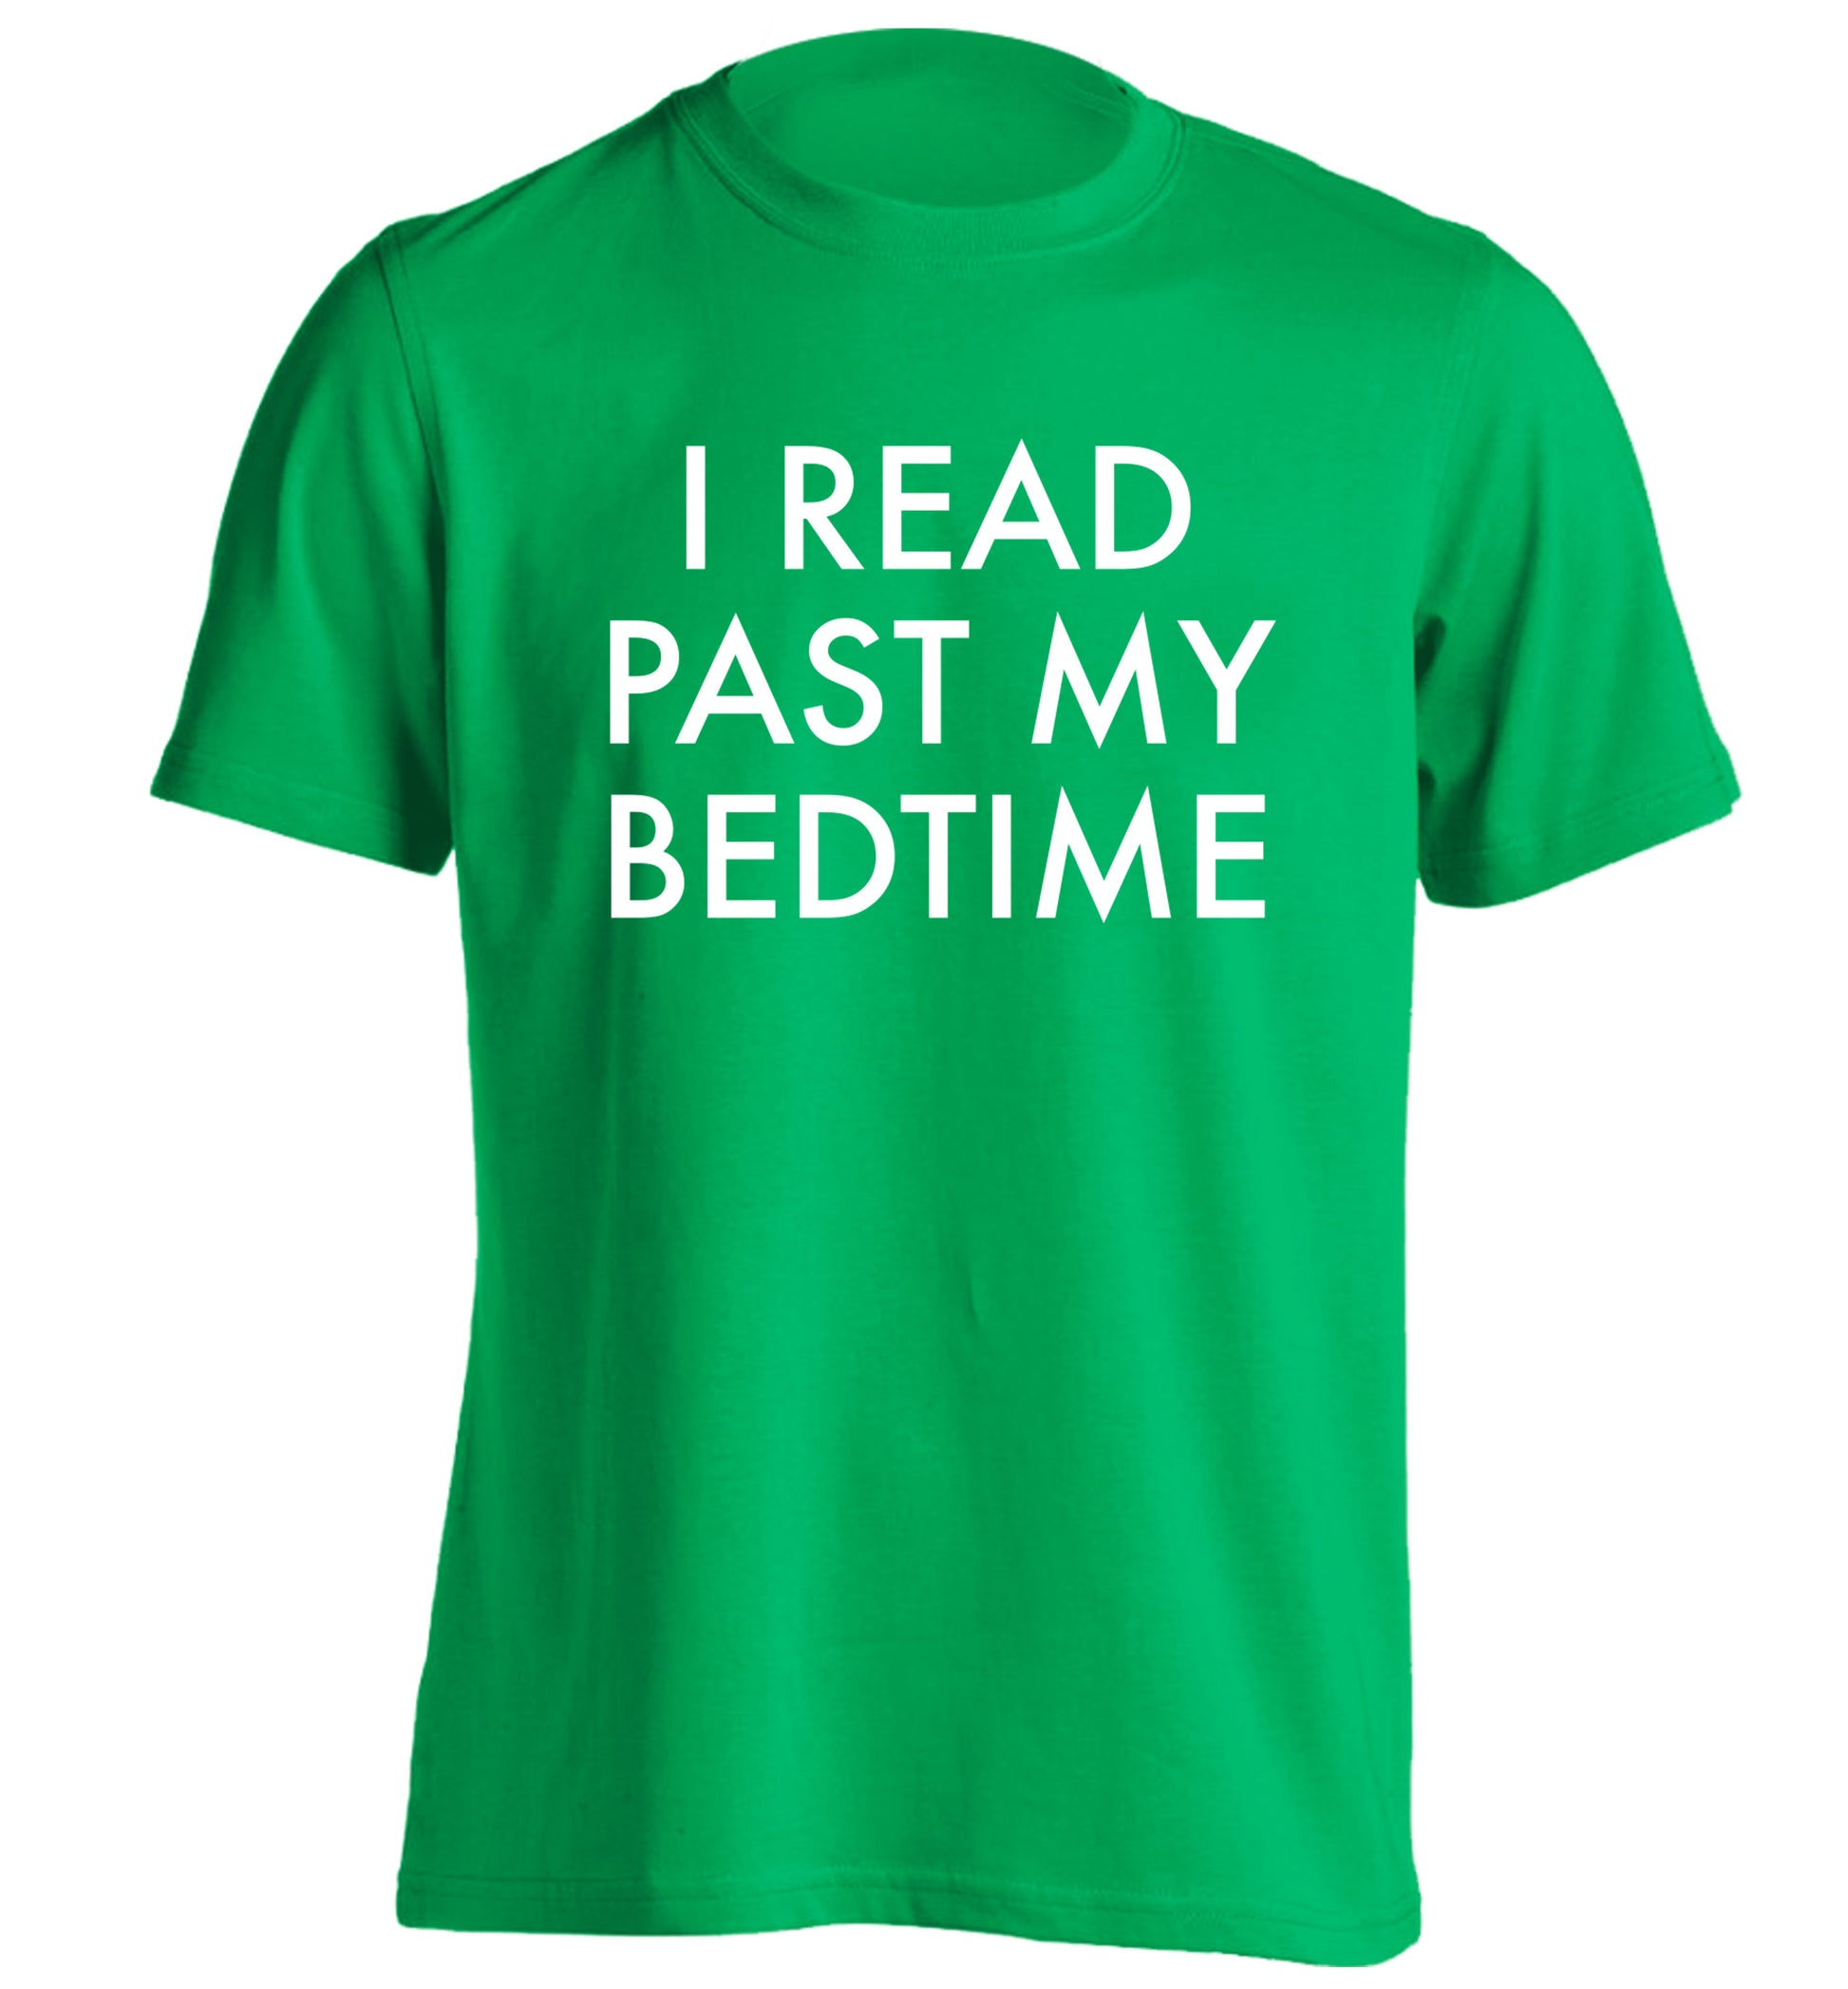 I read past my bedtime adults unisex green Tshirt 2XL